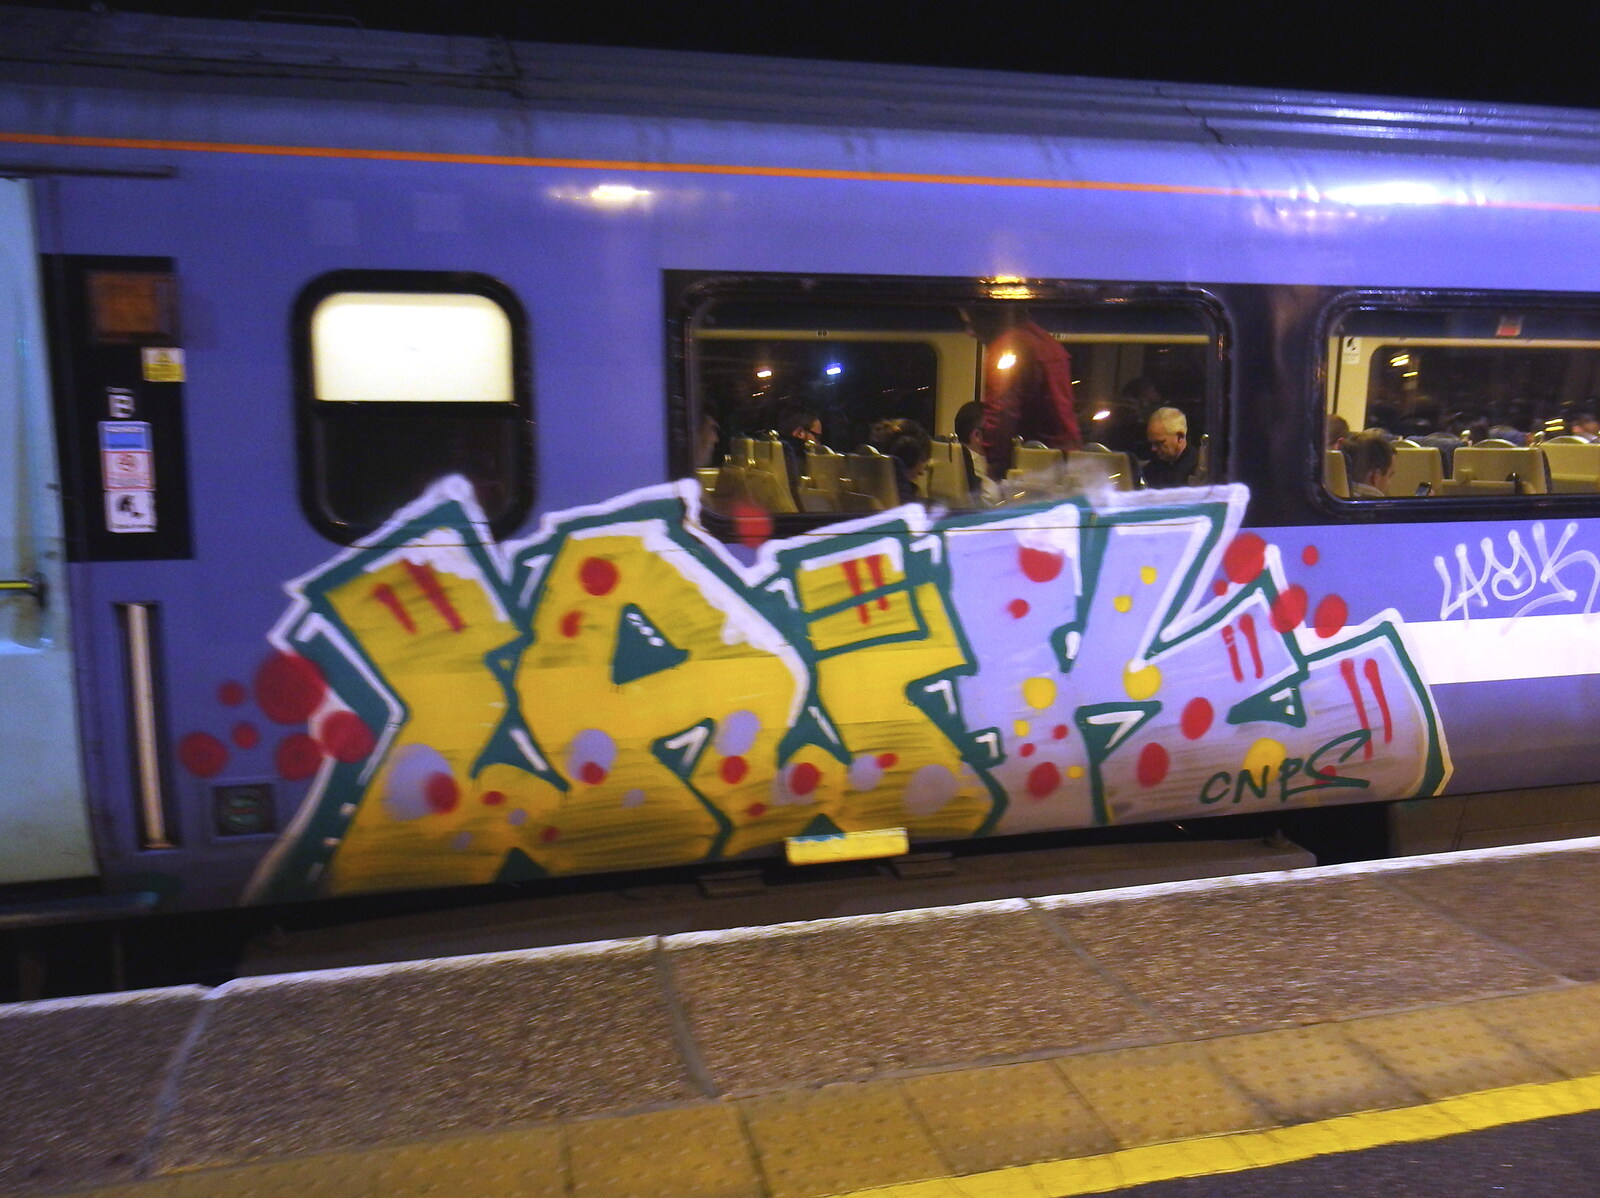 Train graffiti from A Ross Street Reunion, Hoxne, Suffolk - 25th January 2014